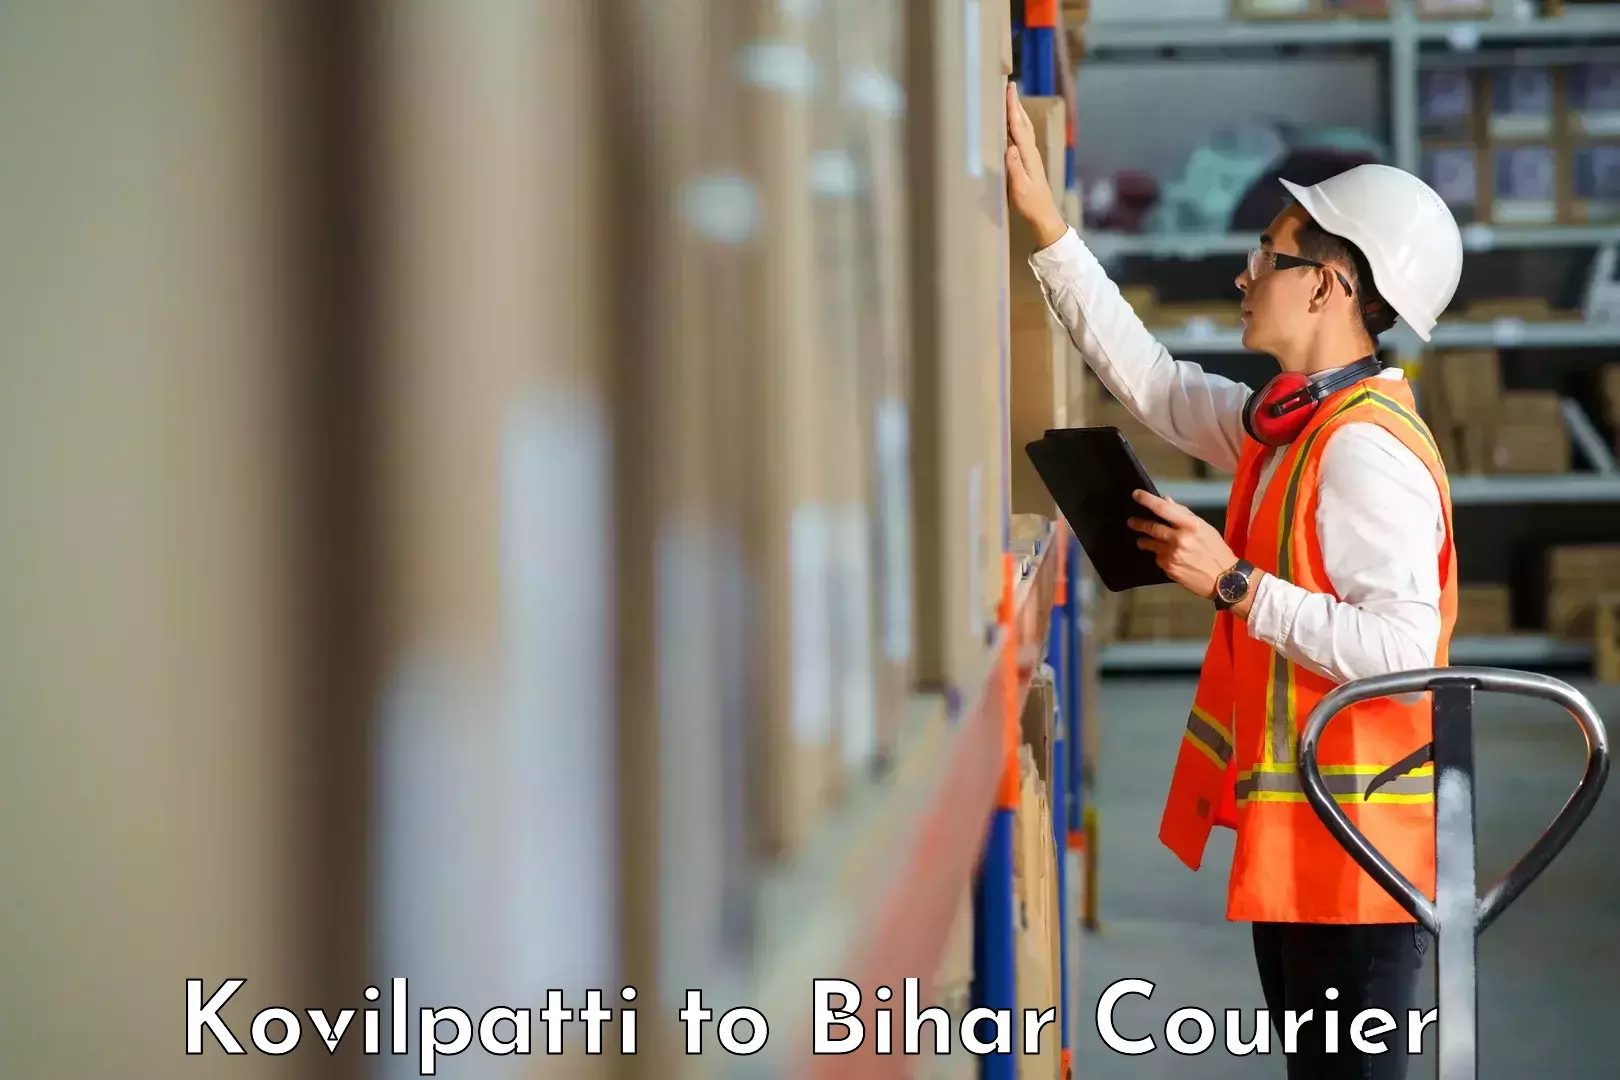 Courier service booking Kovilpatti to Bhagalpur